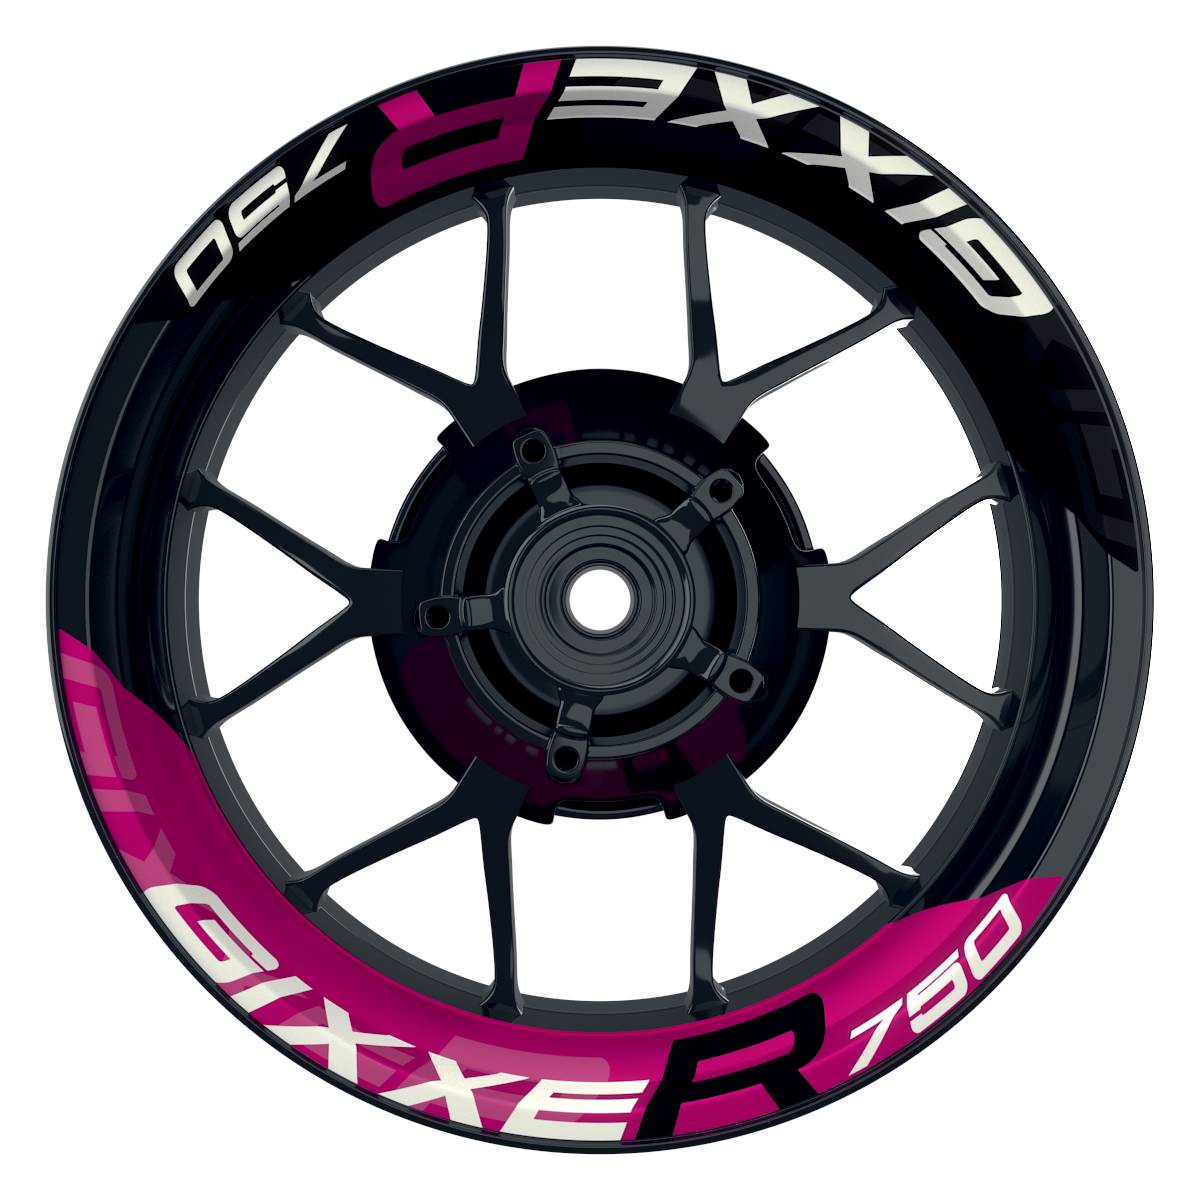 Wheelsticker Felgenaufkleber GIXXER750 halb halb V2 schwarz pink Frontansicht